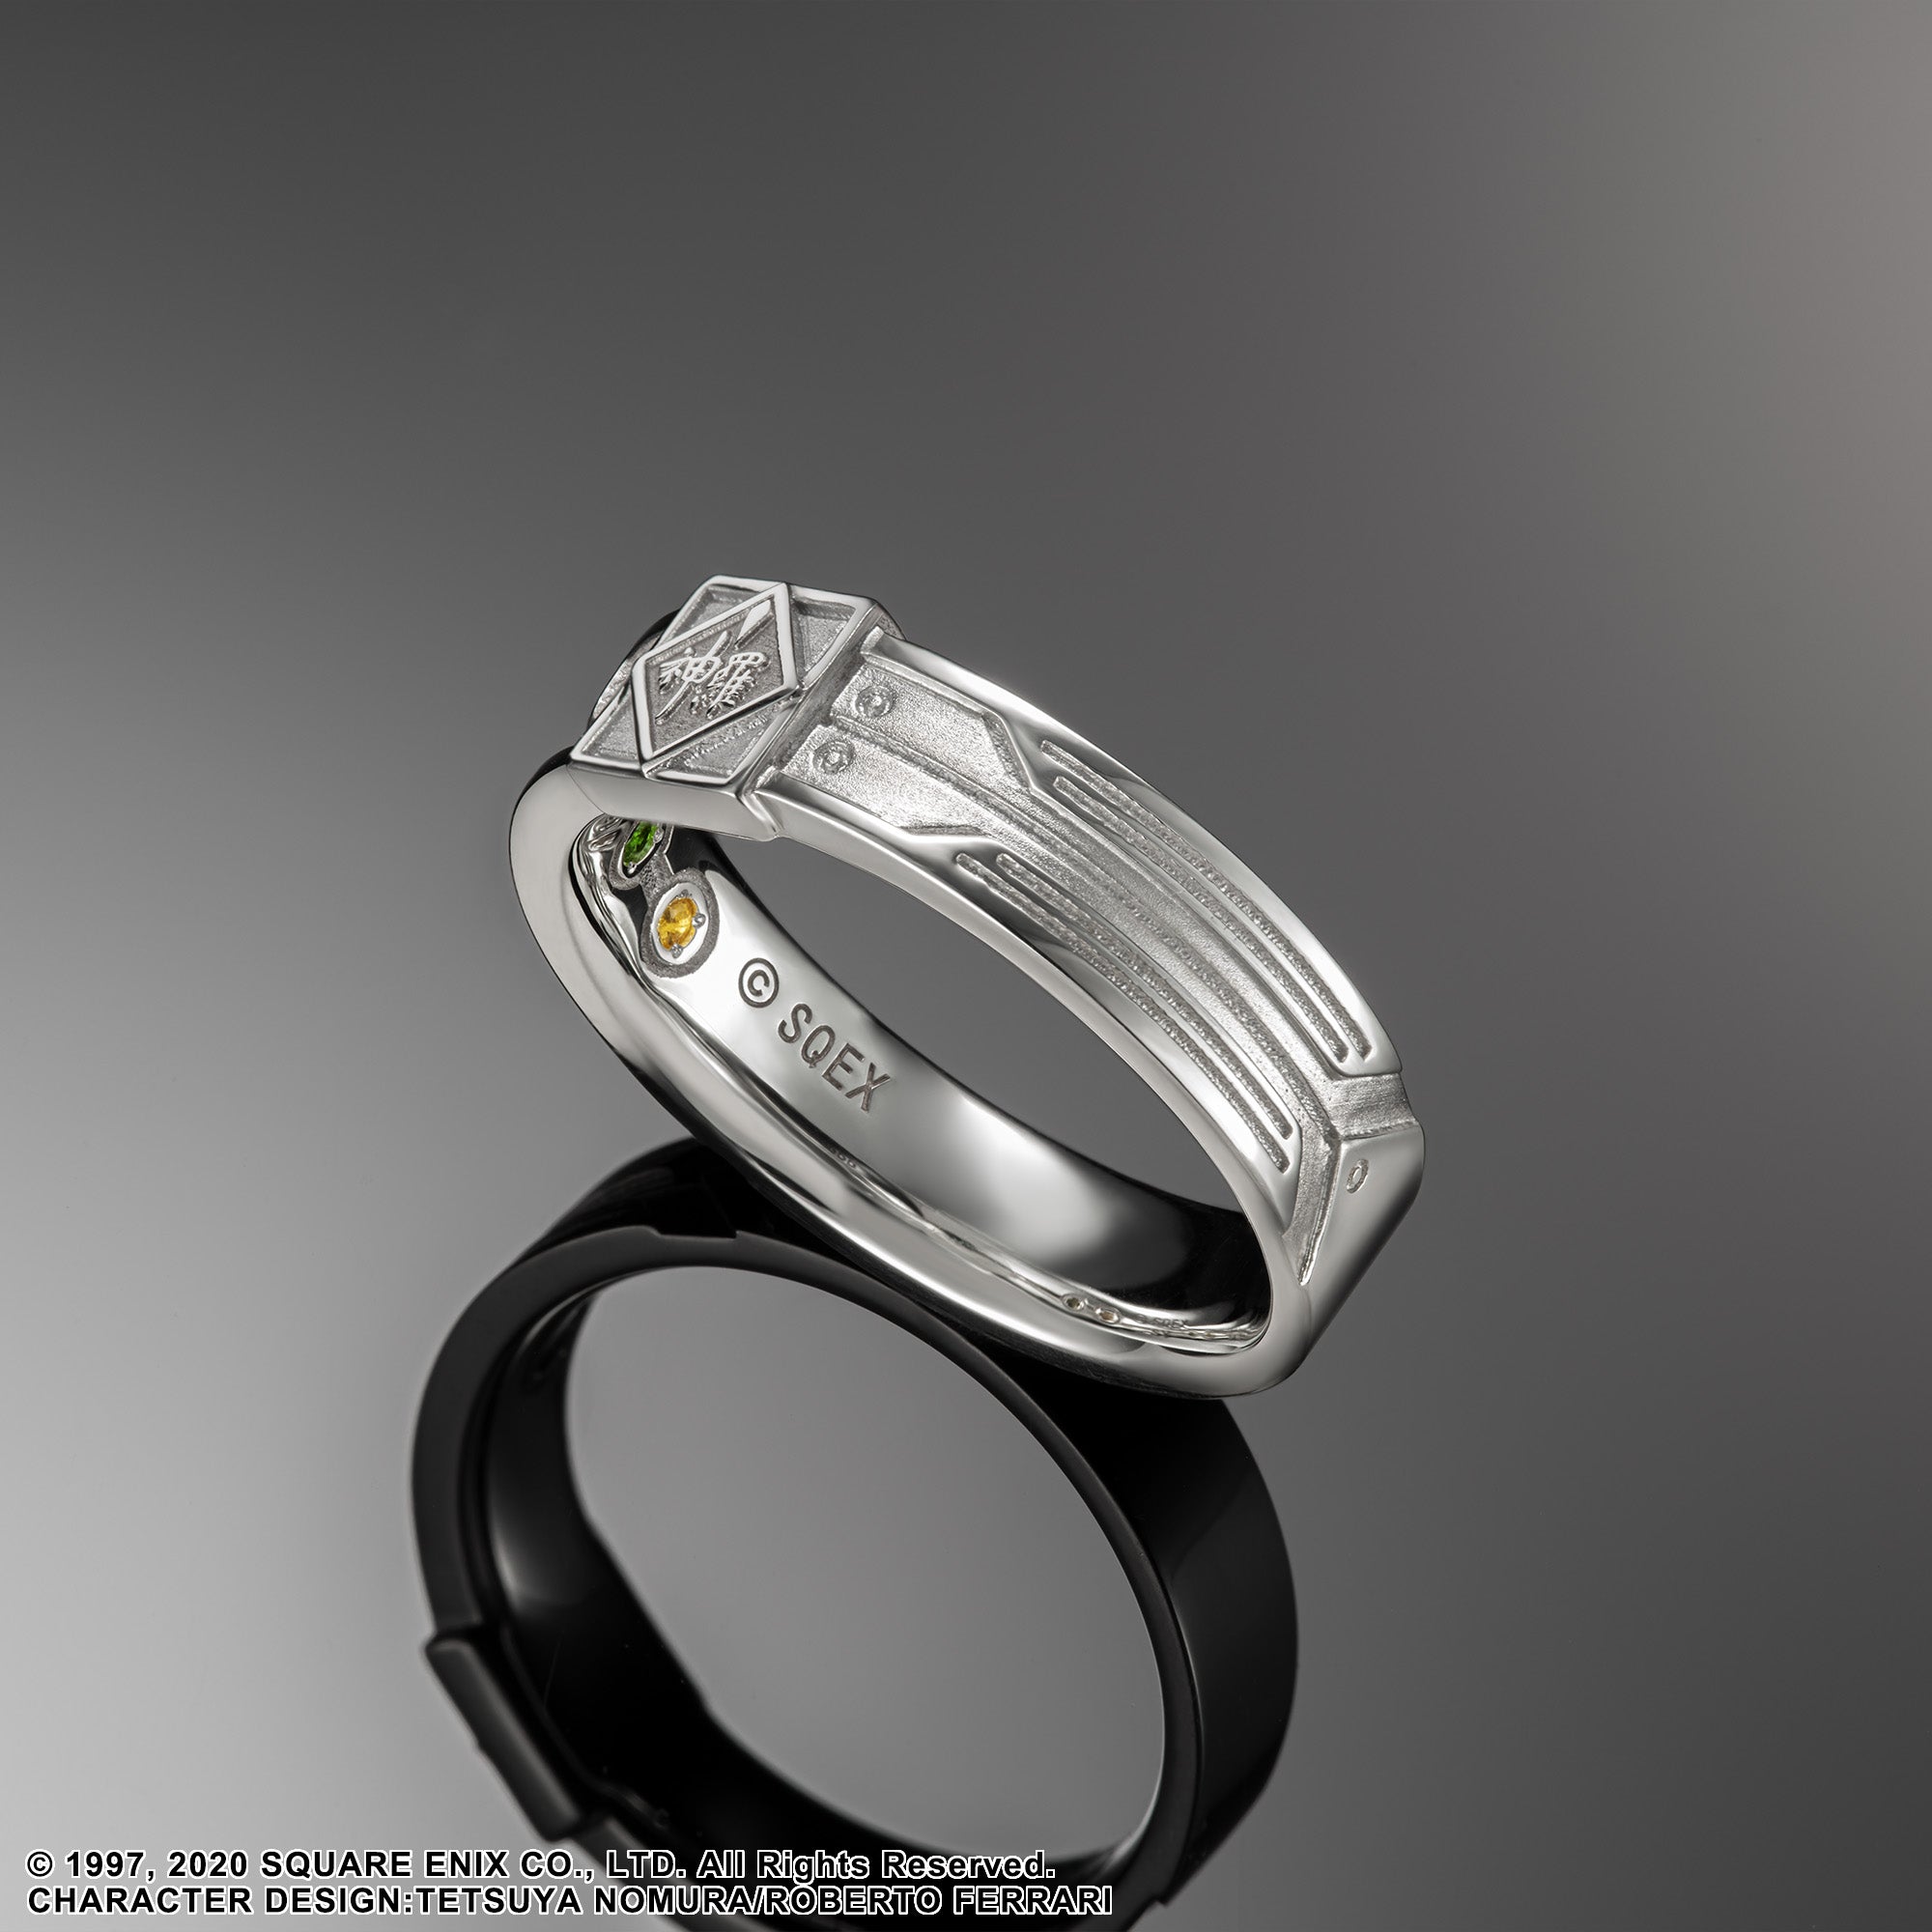 FINAL FANTASY VII Silver Ring SHINRA MATERIA TYPE A (Emerald + Blue Sapphire) Size 17